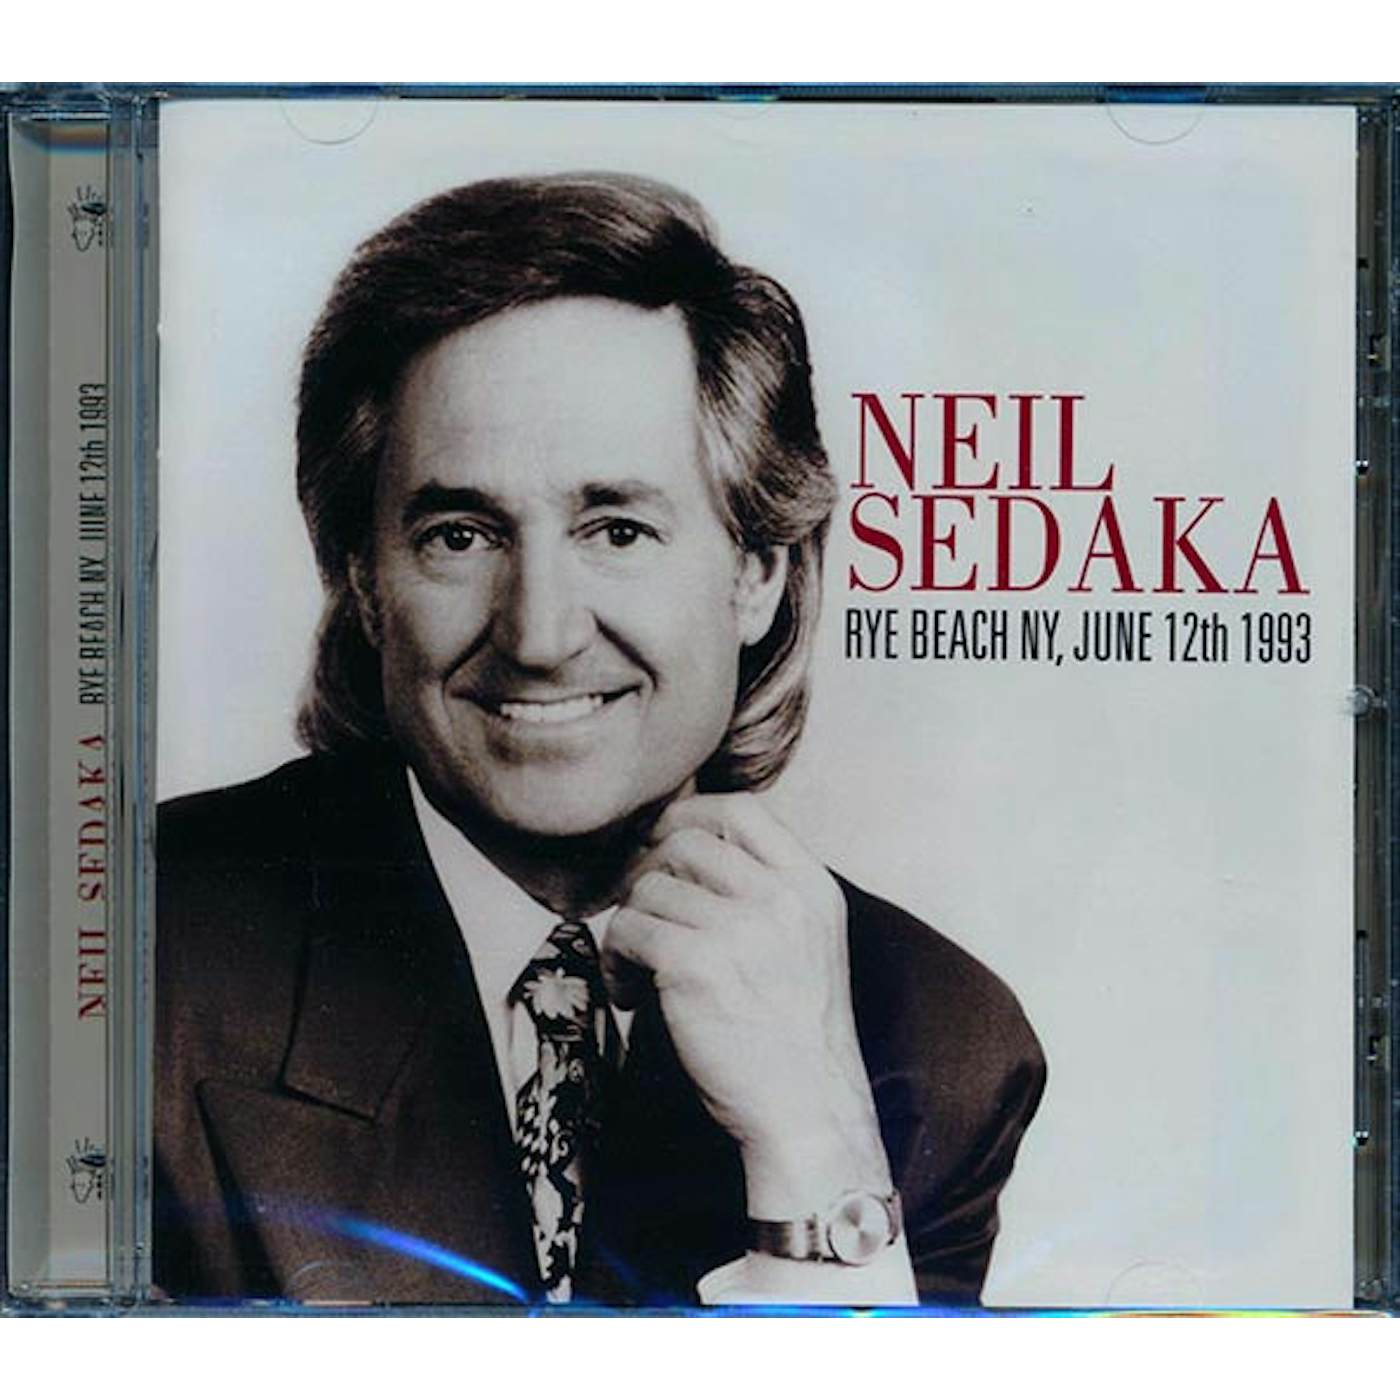 Neil Sedaka  CD -  Rye Beach NY, June 12th 1993 (remastered)